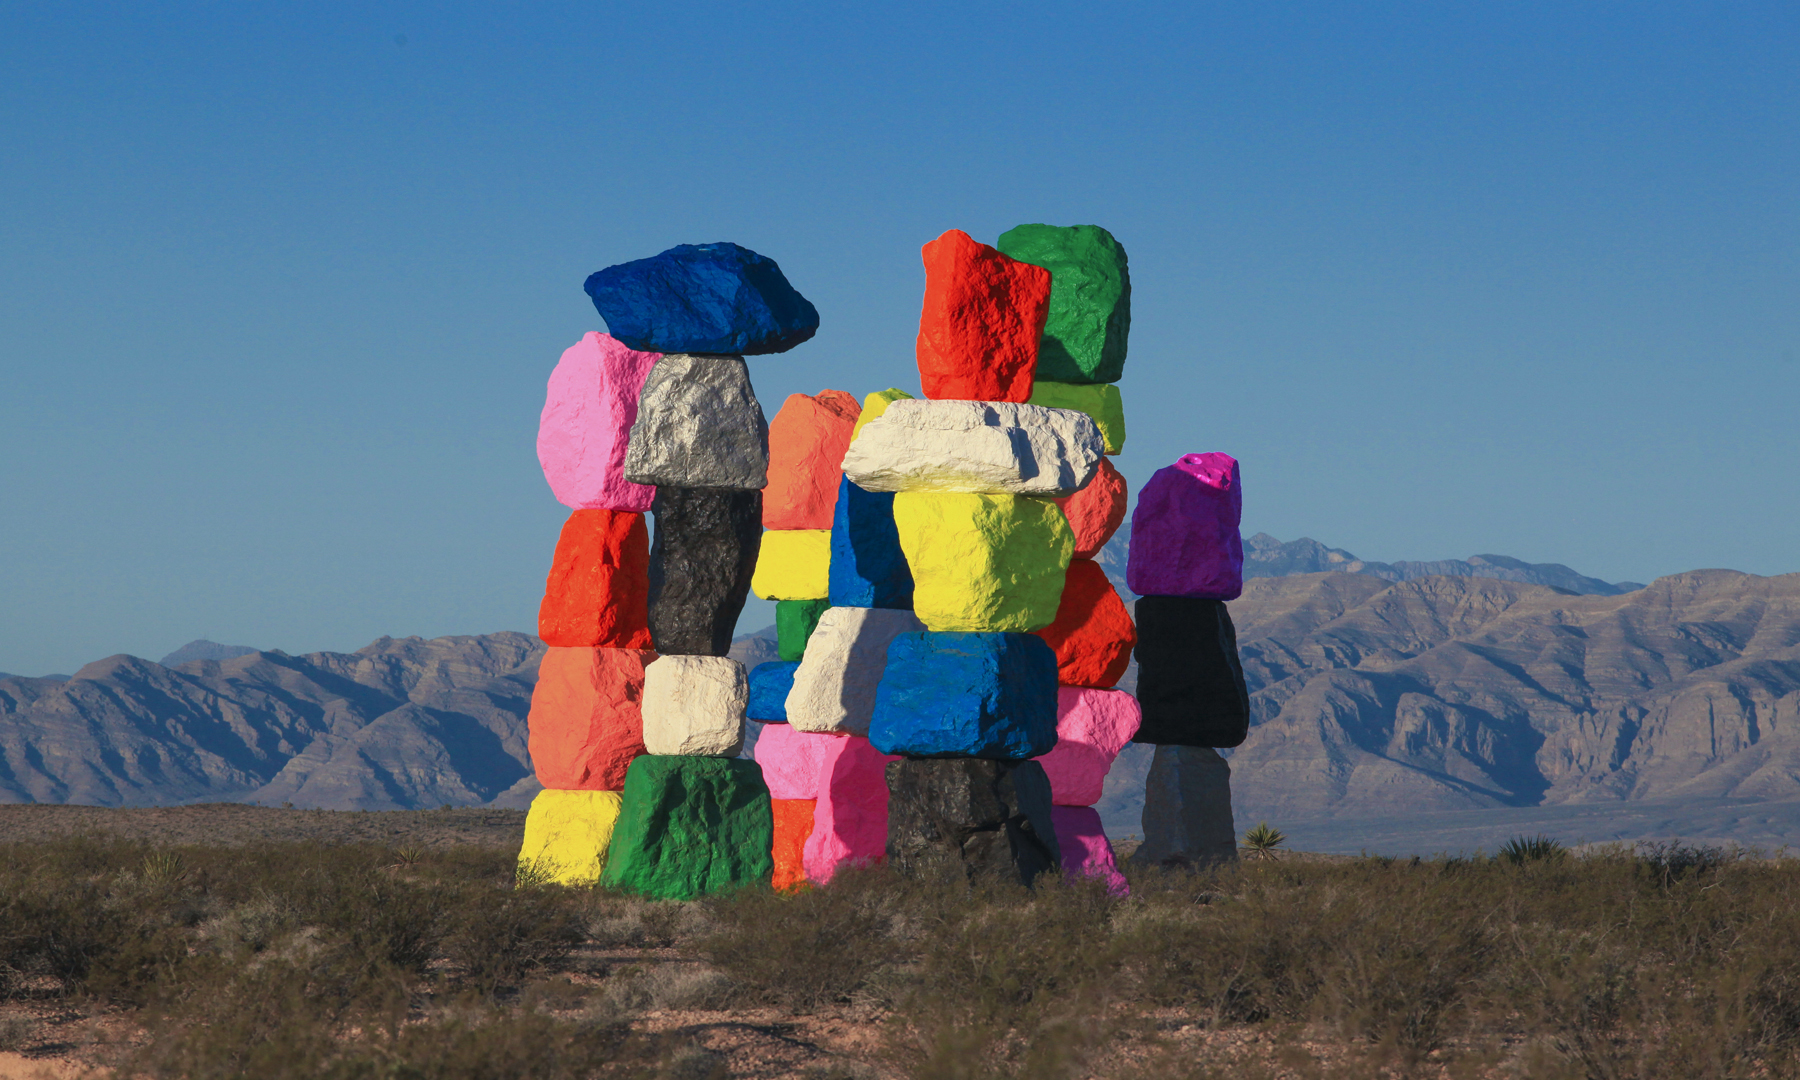 Ugo Rondinone's Seven Magic Mountains art installation in Las Vegas.